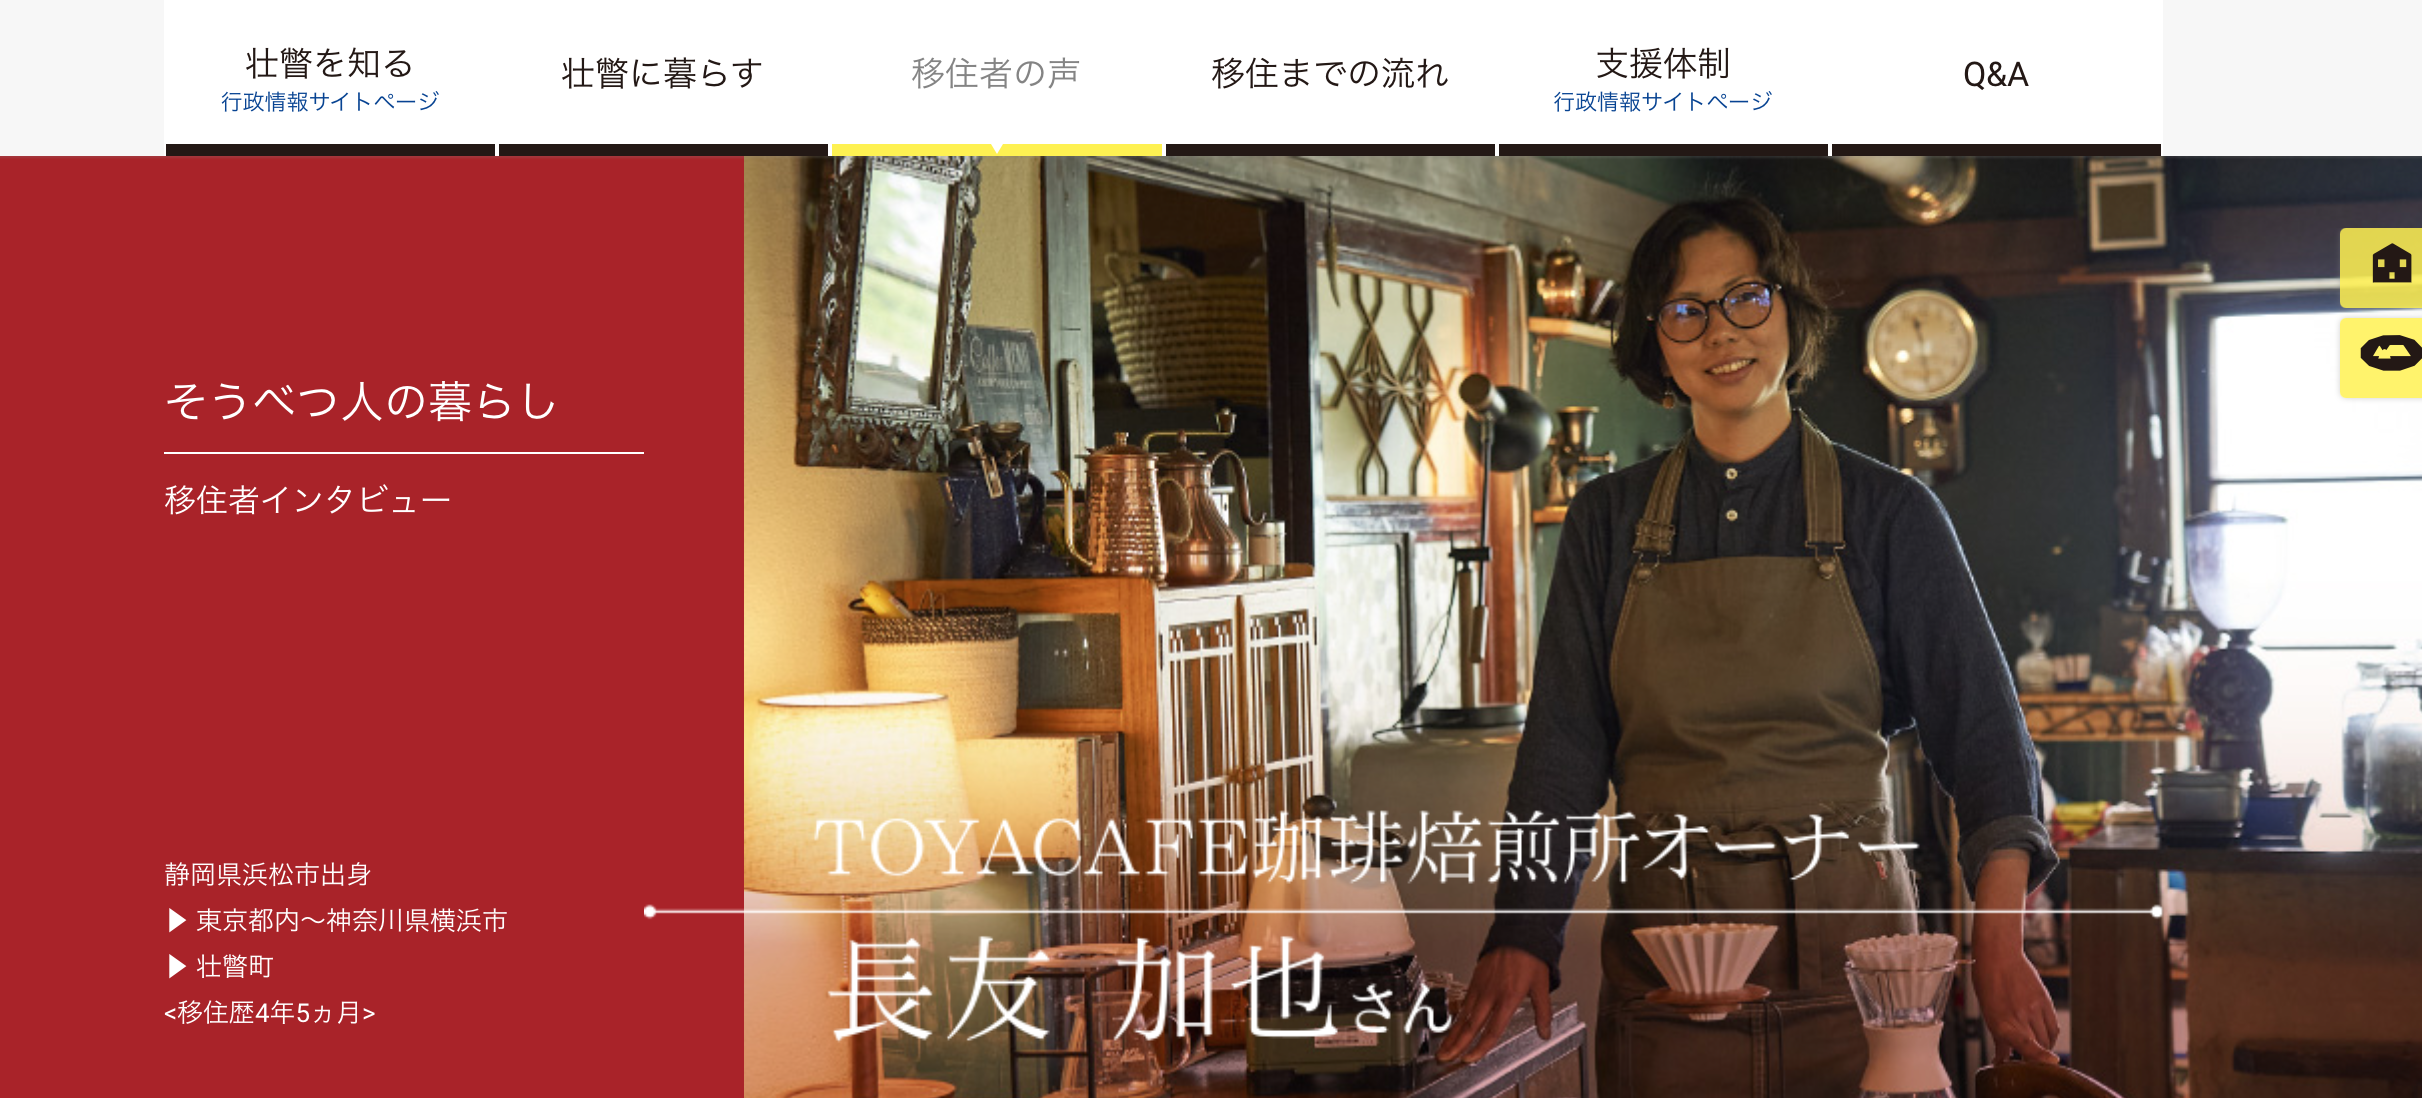 TOYACAFE珈琲焙煎所のインタビュー記事をご紹介！& TOYACAFEからちょっとしたお知らせ!